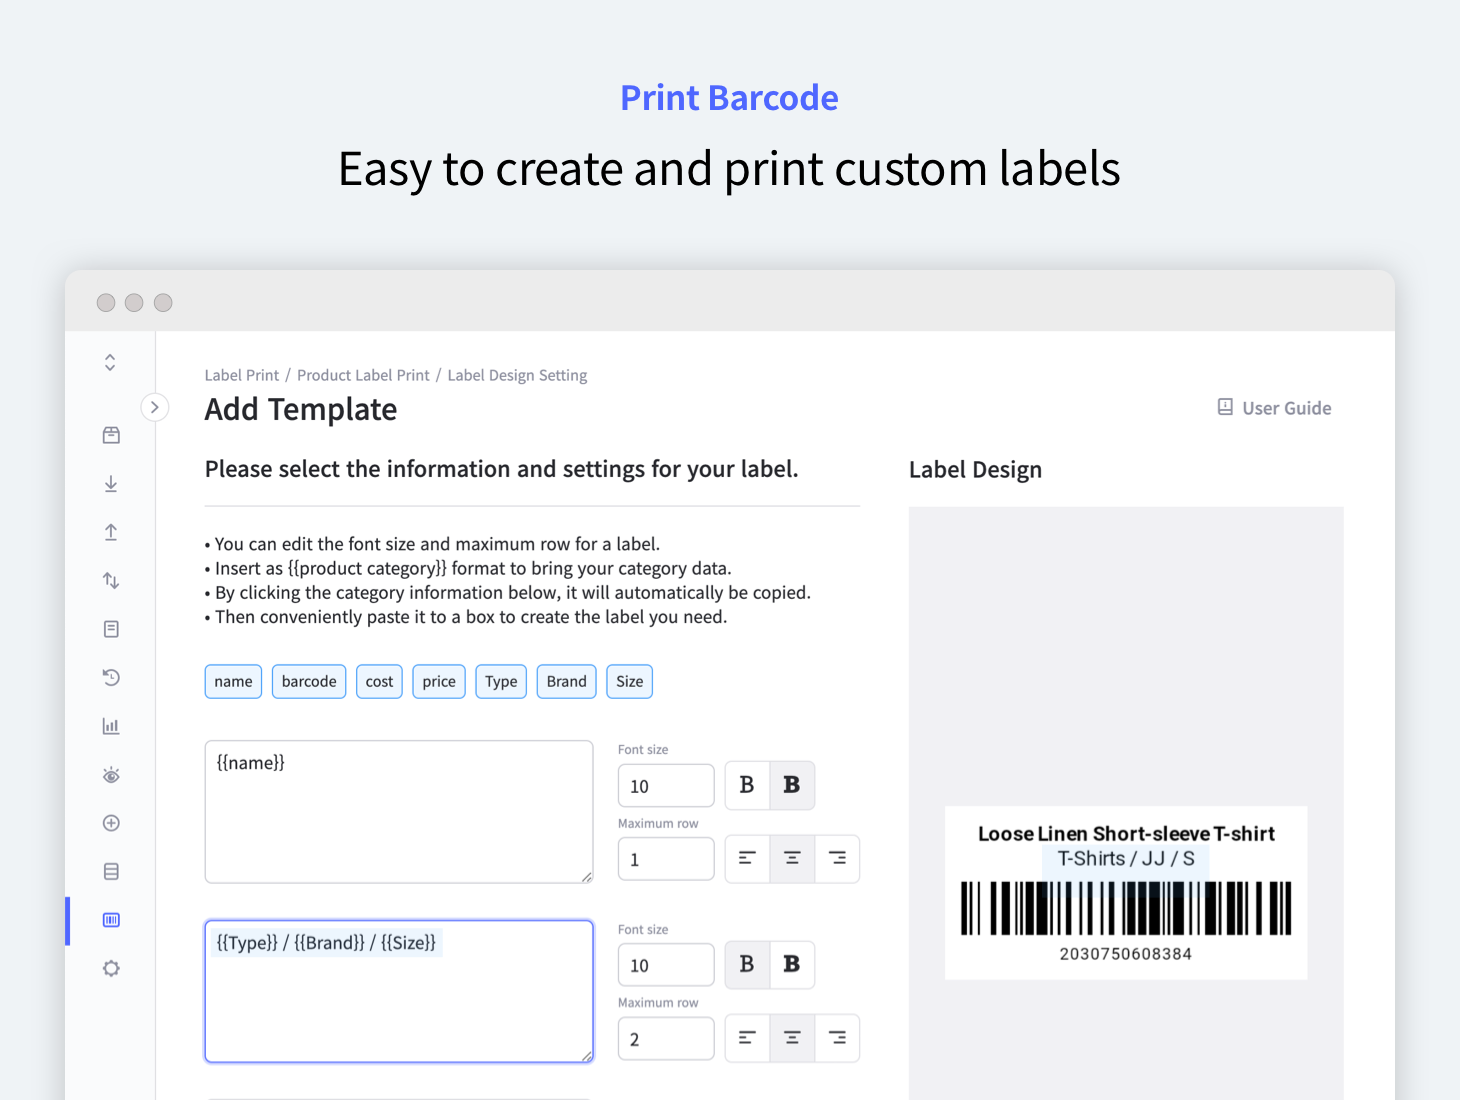 Print Barcode: Create and print custom labels easily